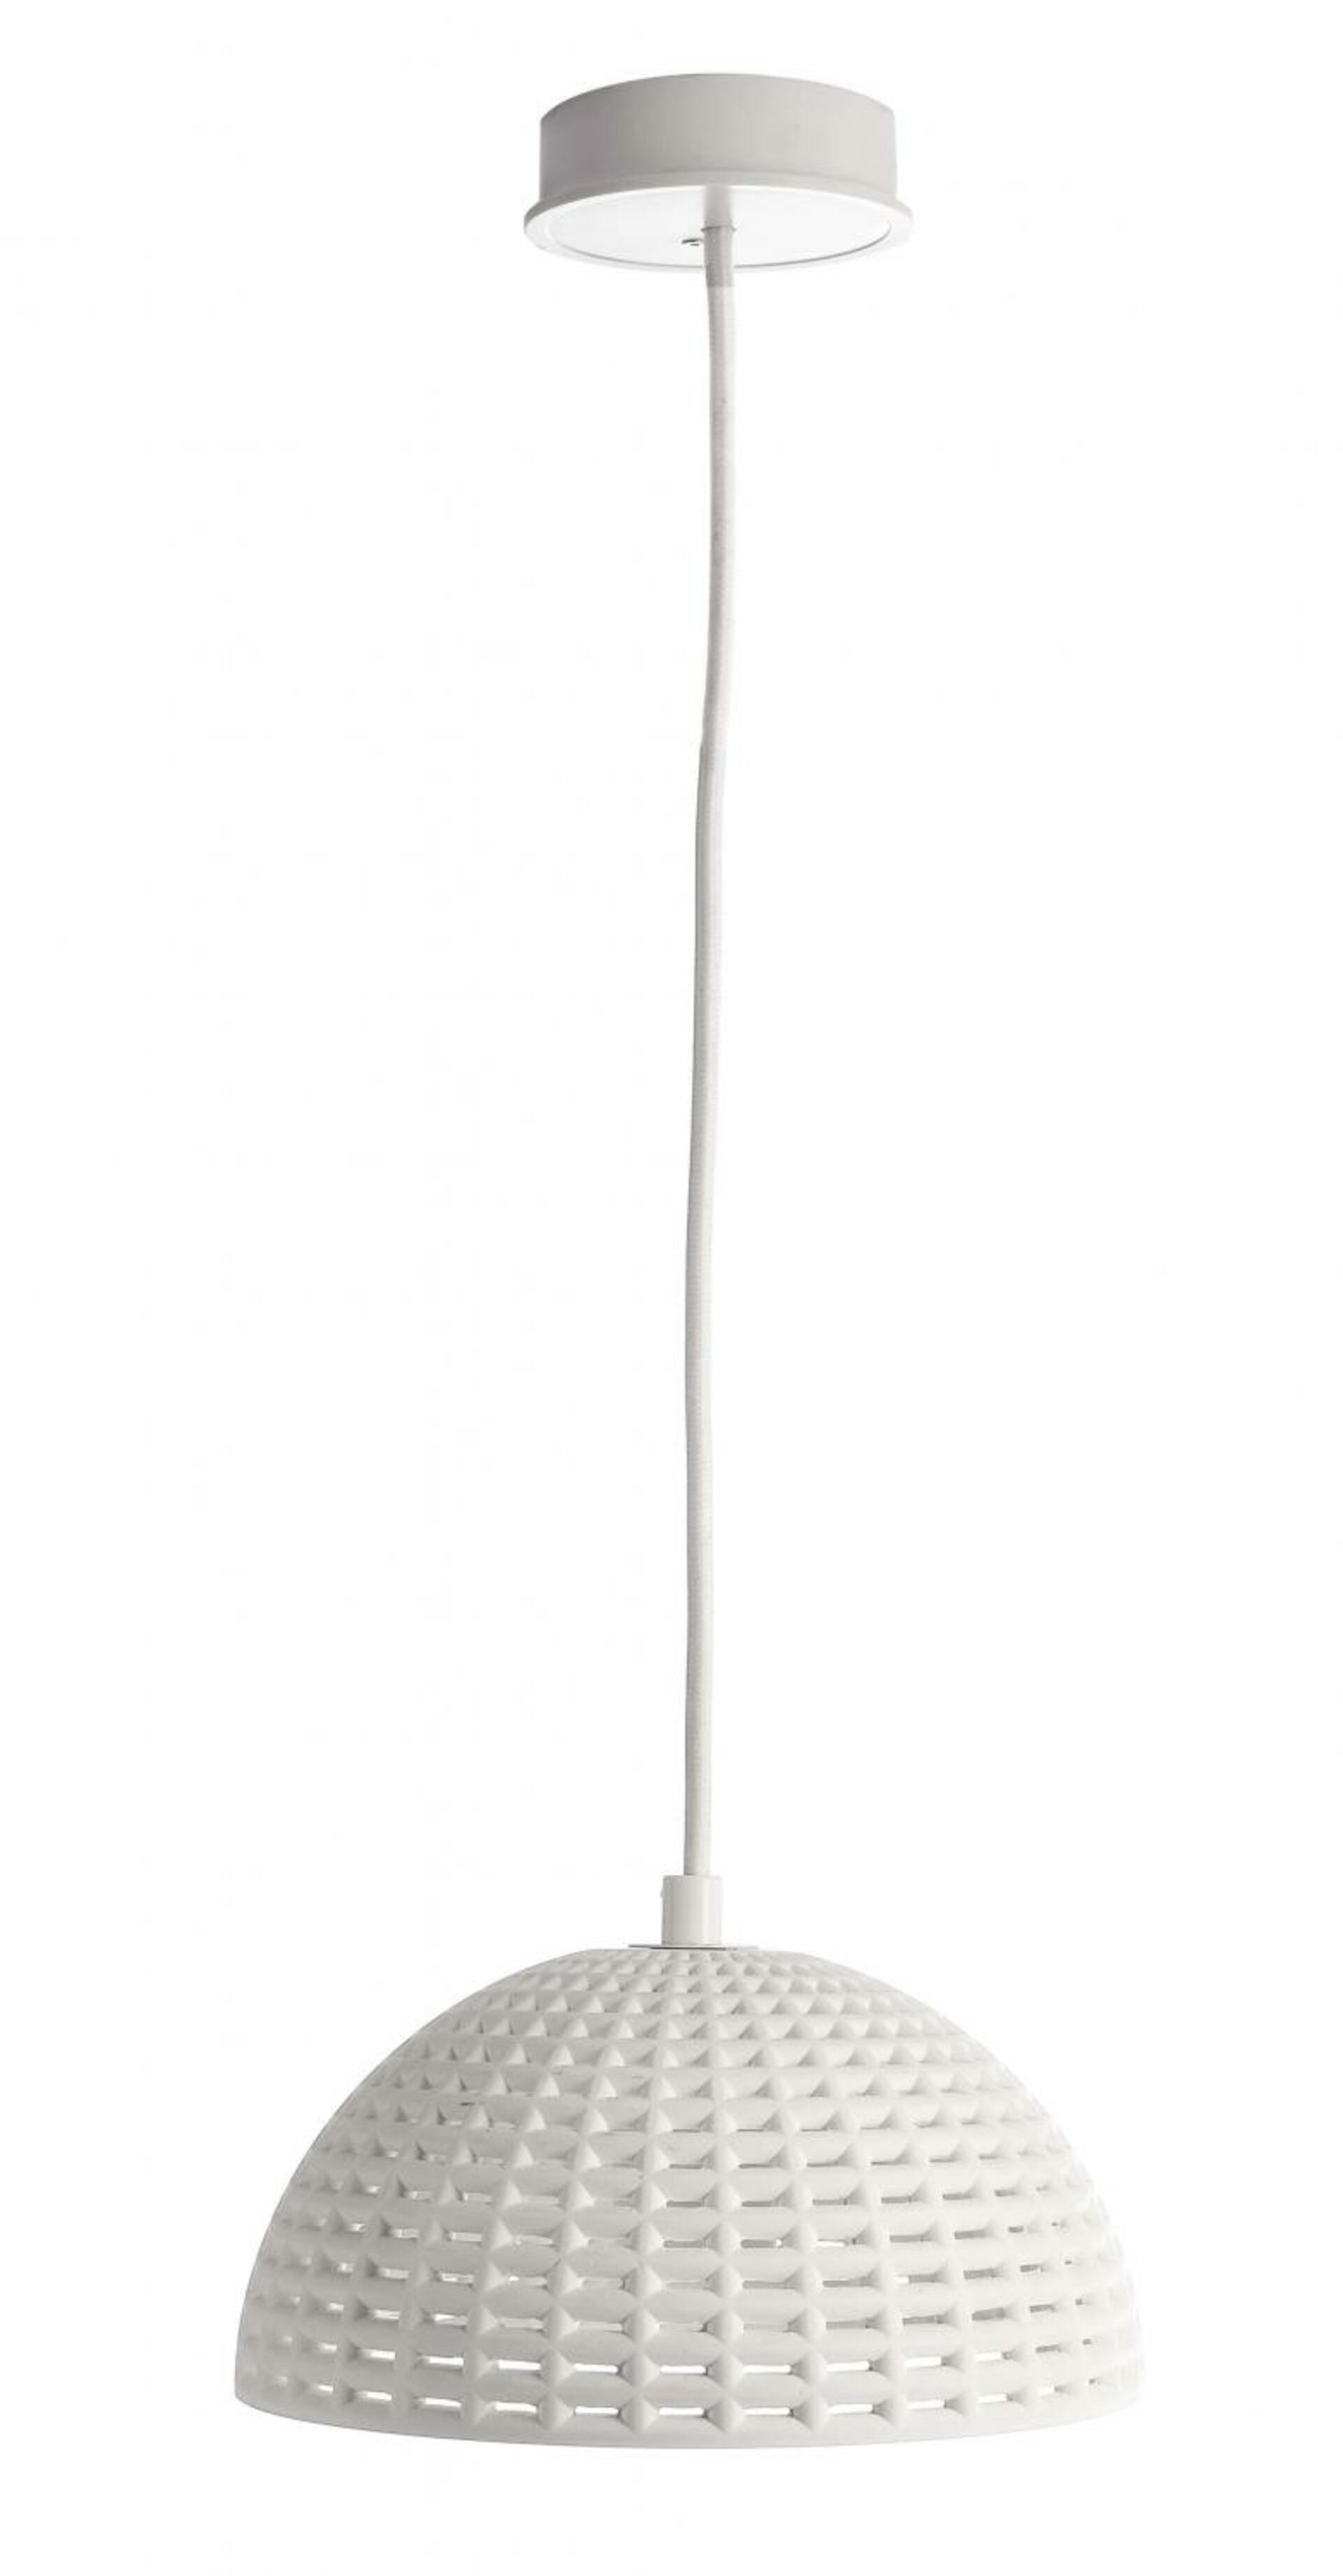 Light Impressions Deko-Light závěsné svítidlo Basket I 220-240V AC/50-60Hz E27 1x max. 40,00 W bílá 342142